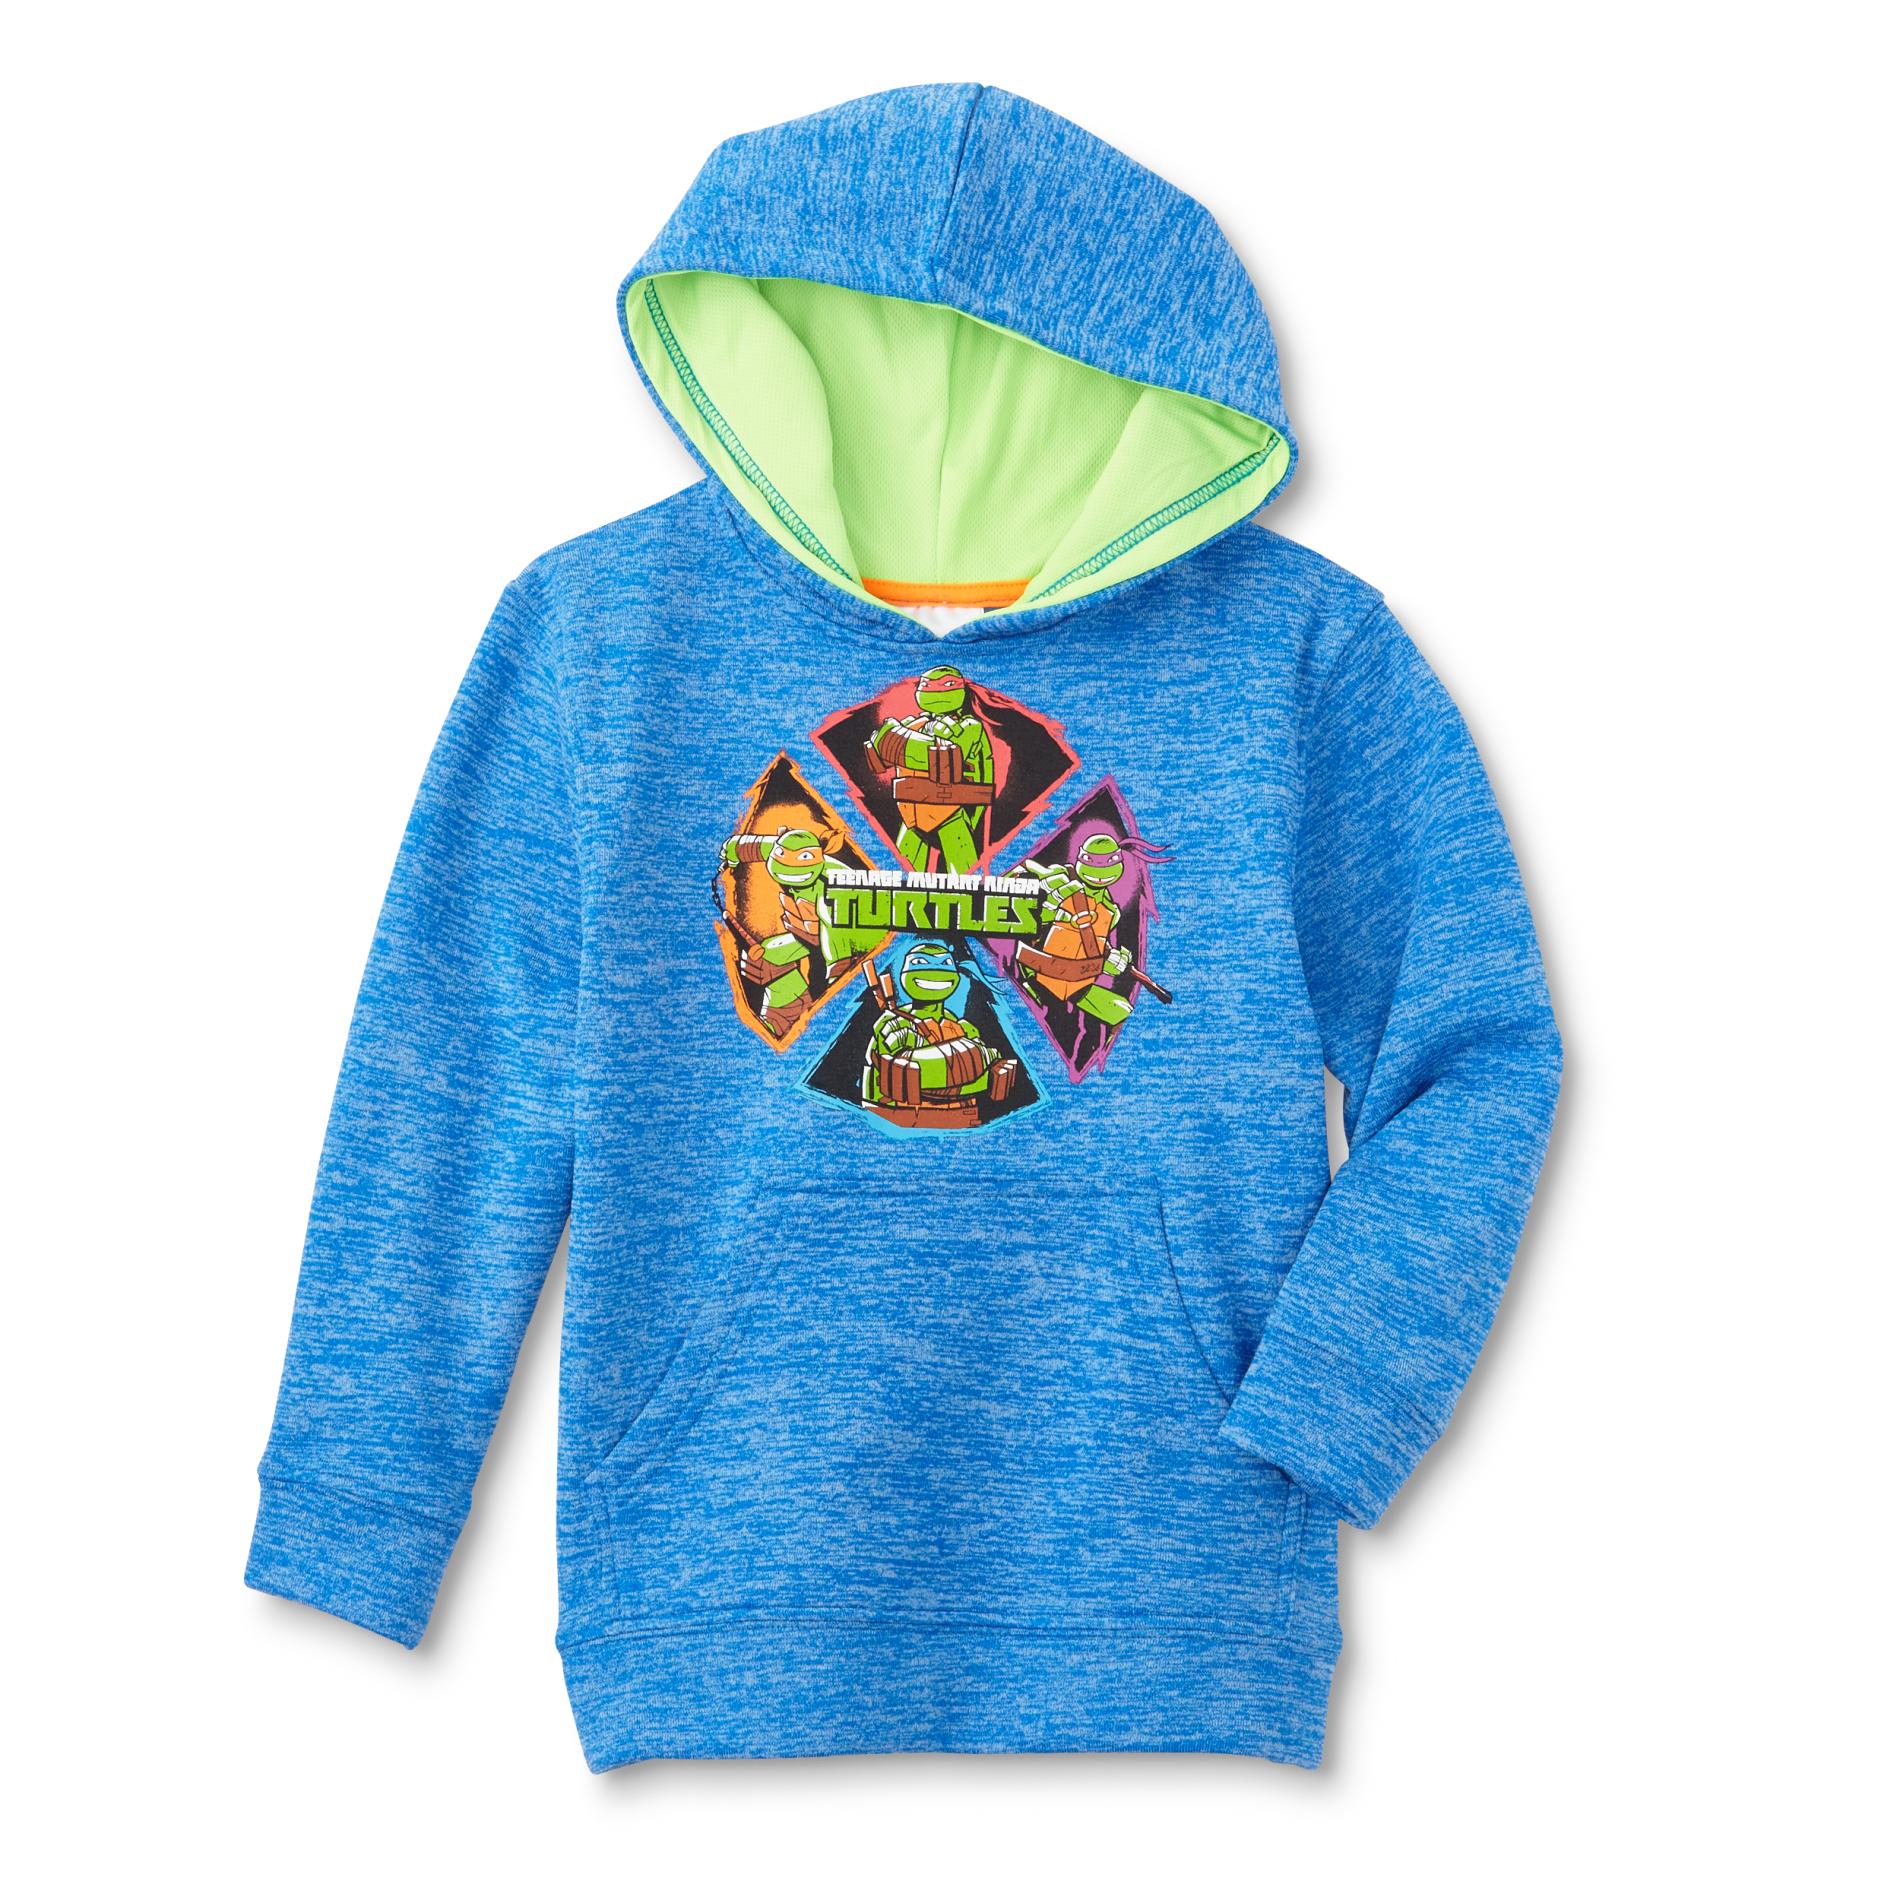 Nickelodeon Teenage Mutant Ninja Turtles Boys' Hooded Sweatshirt